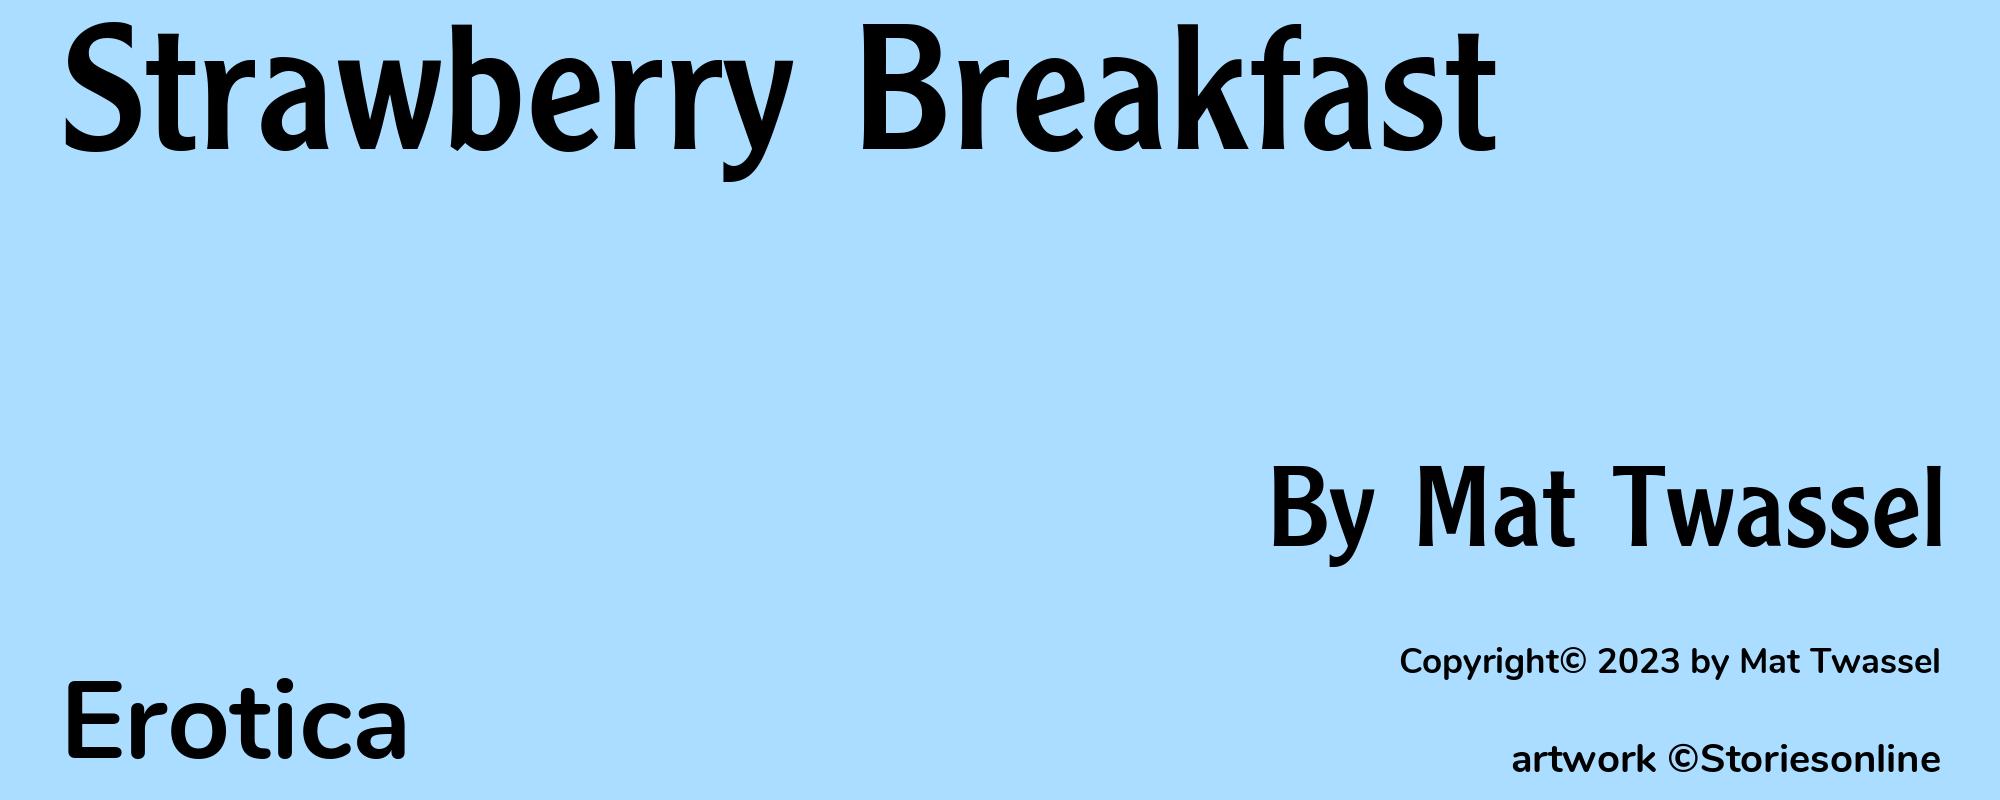 Strawberry Breakfast - Cover